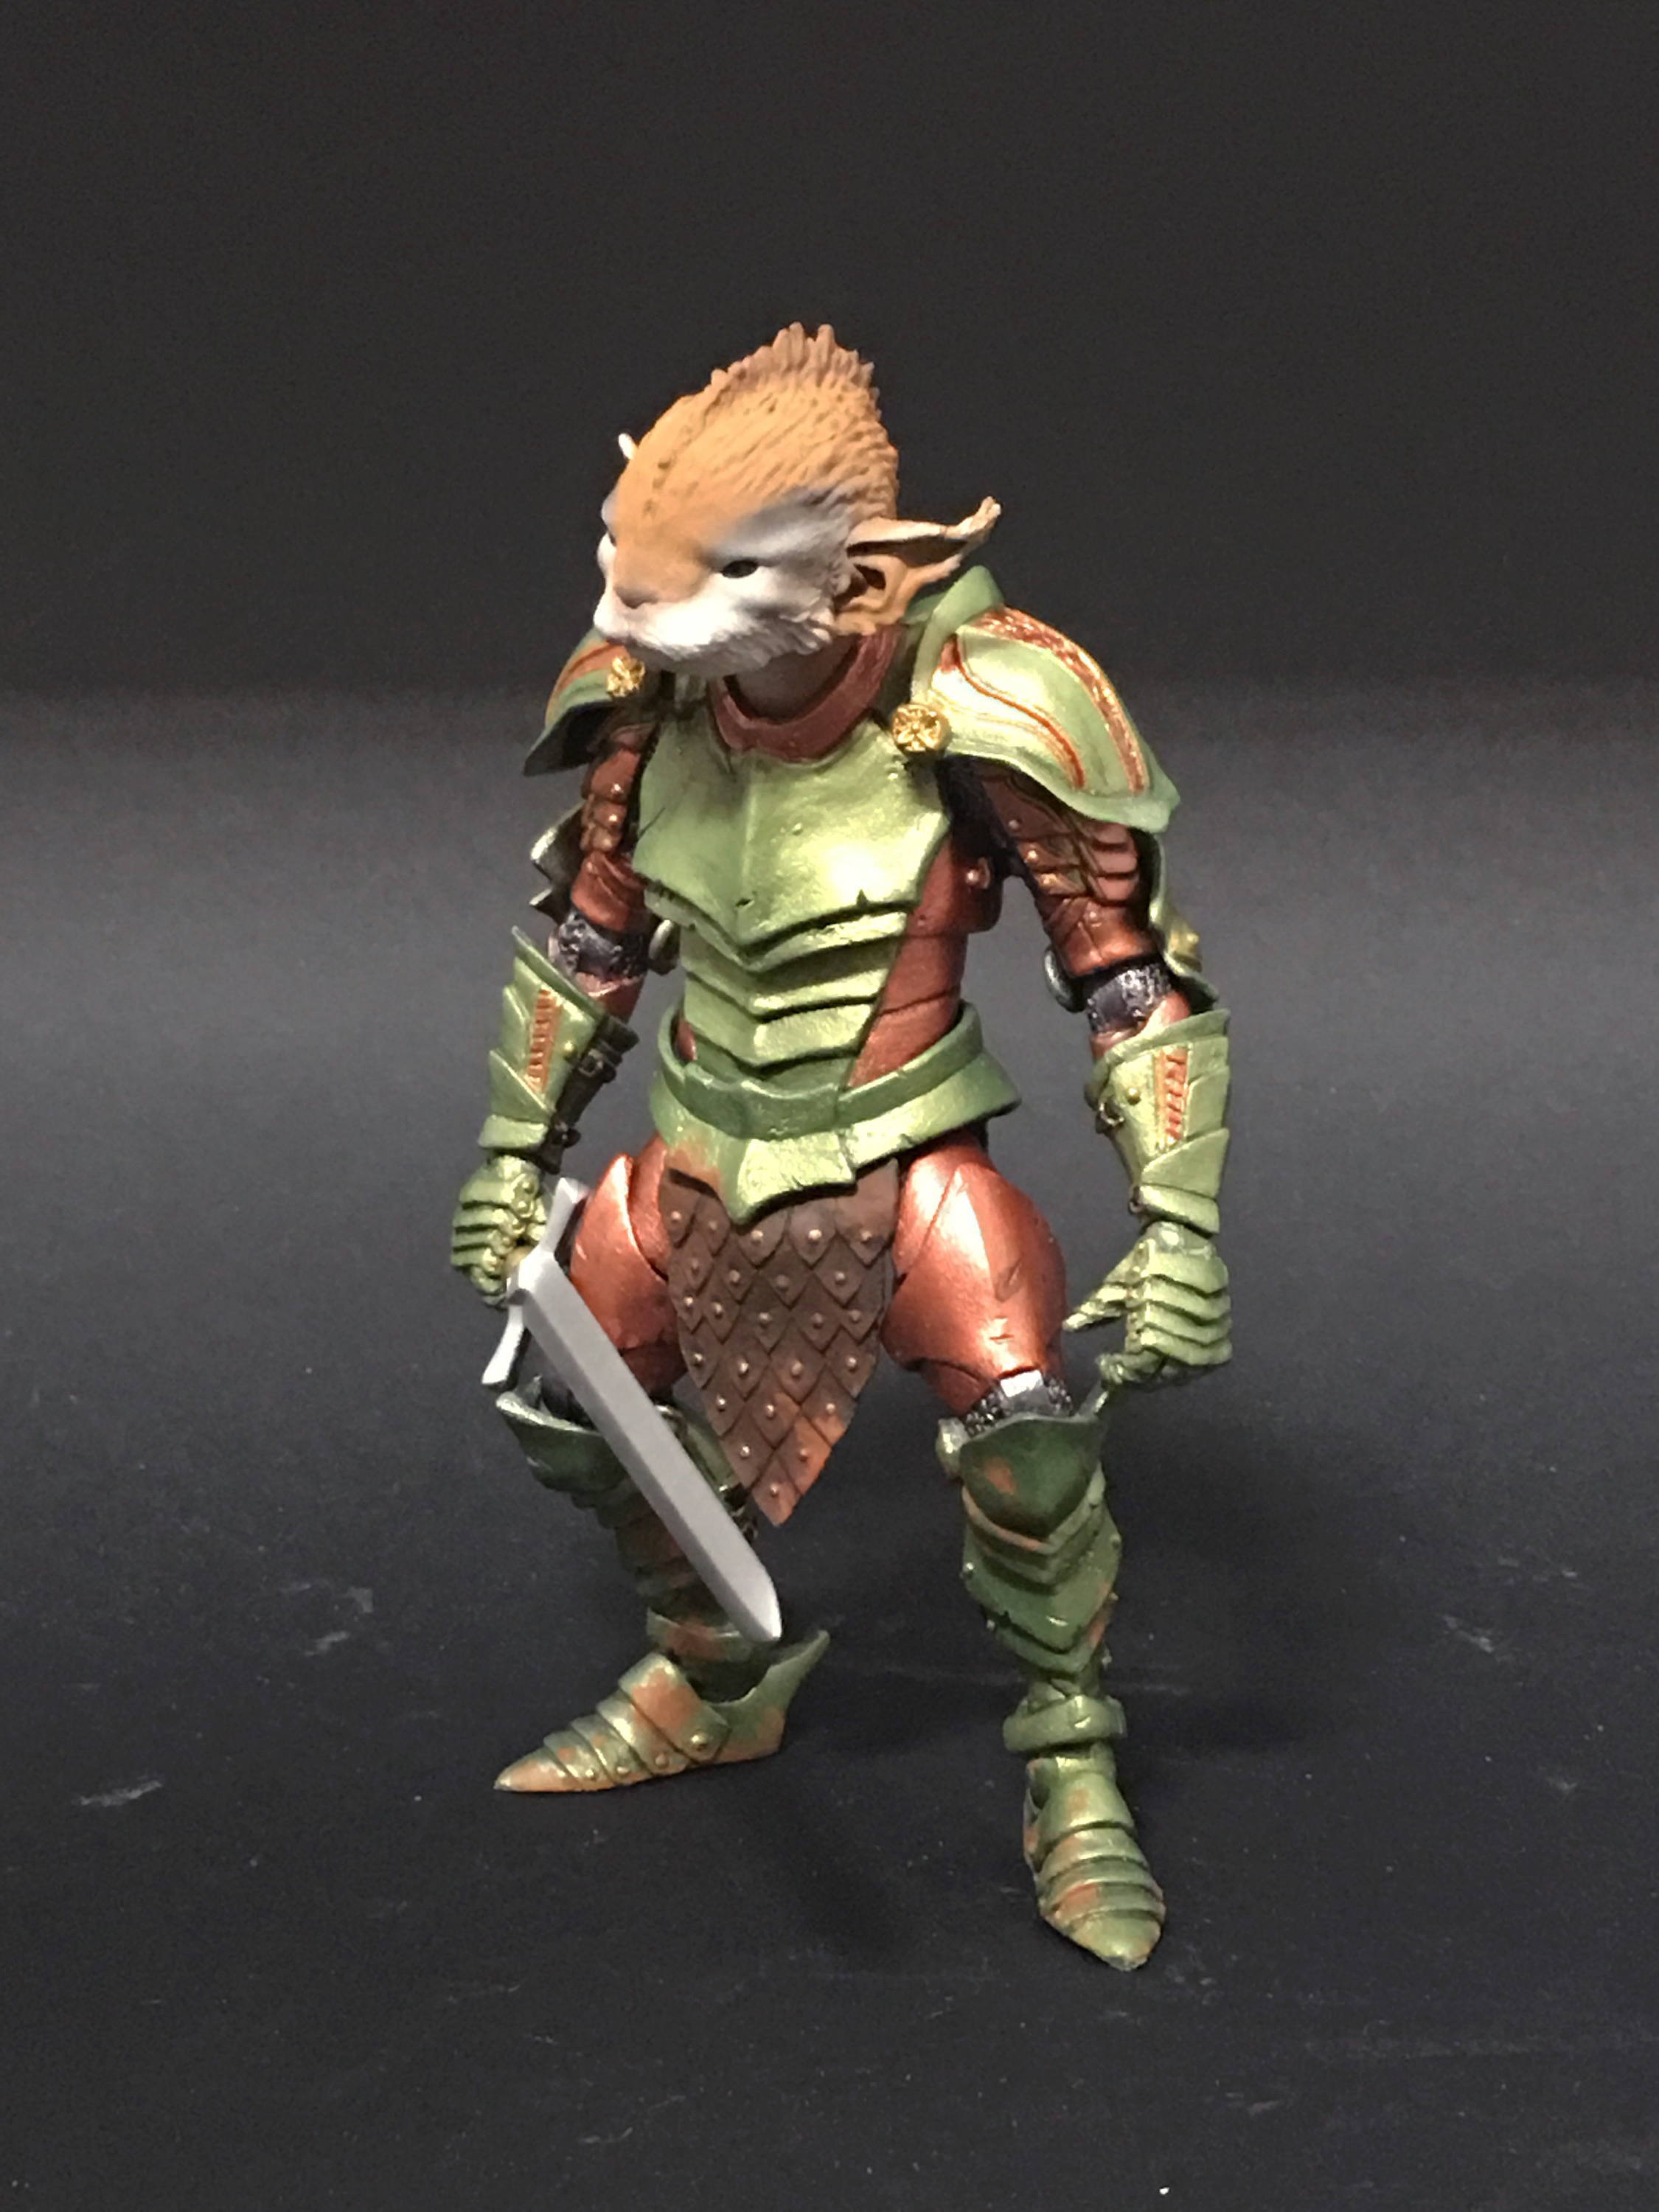 Thistlethorn - Mythic Legions action figure from Four Horsemen Studios